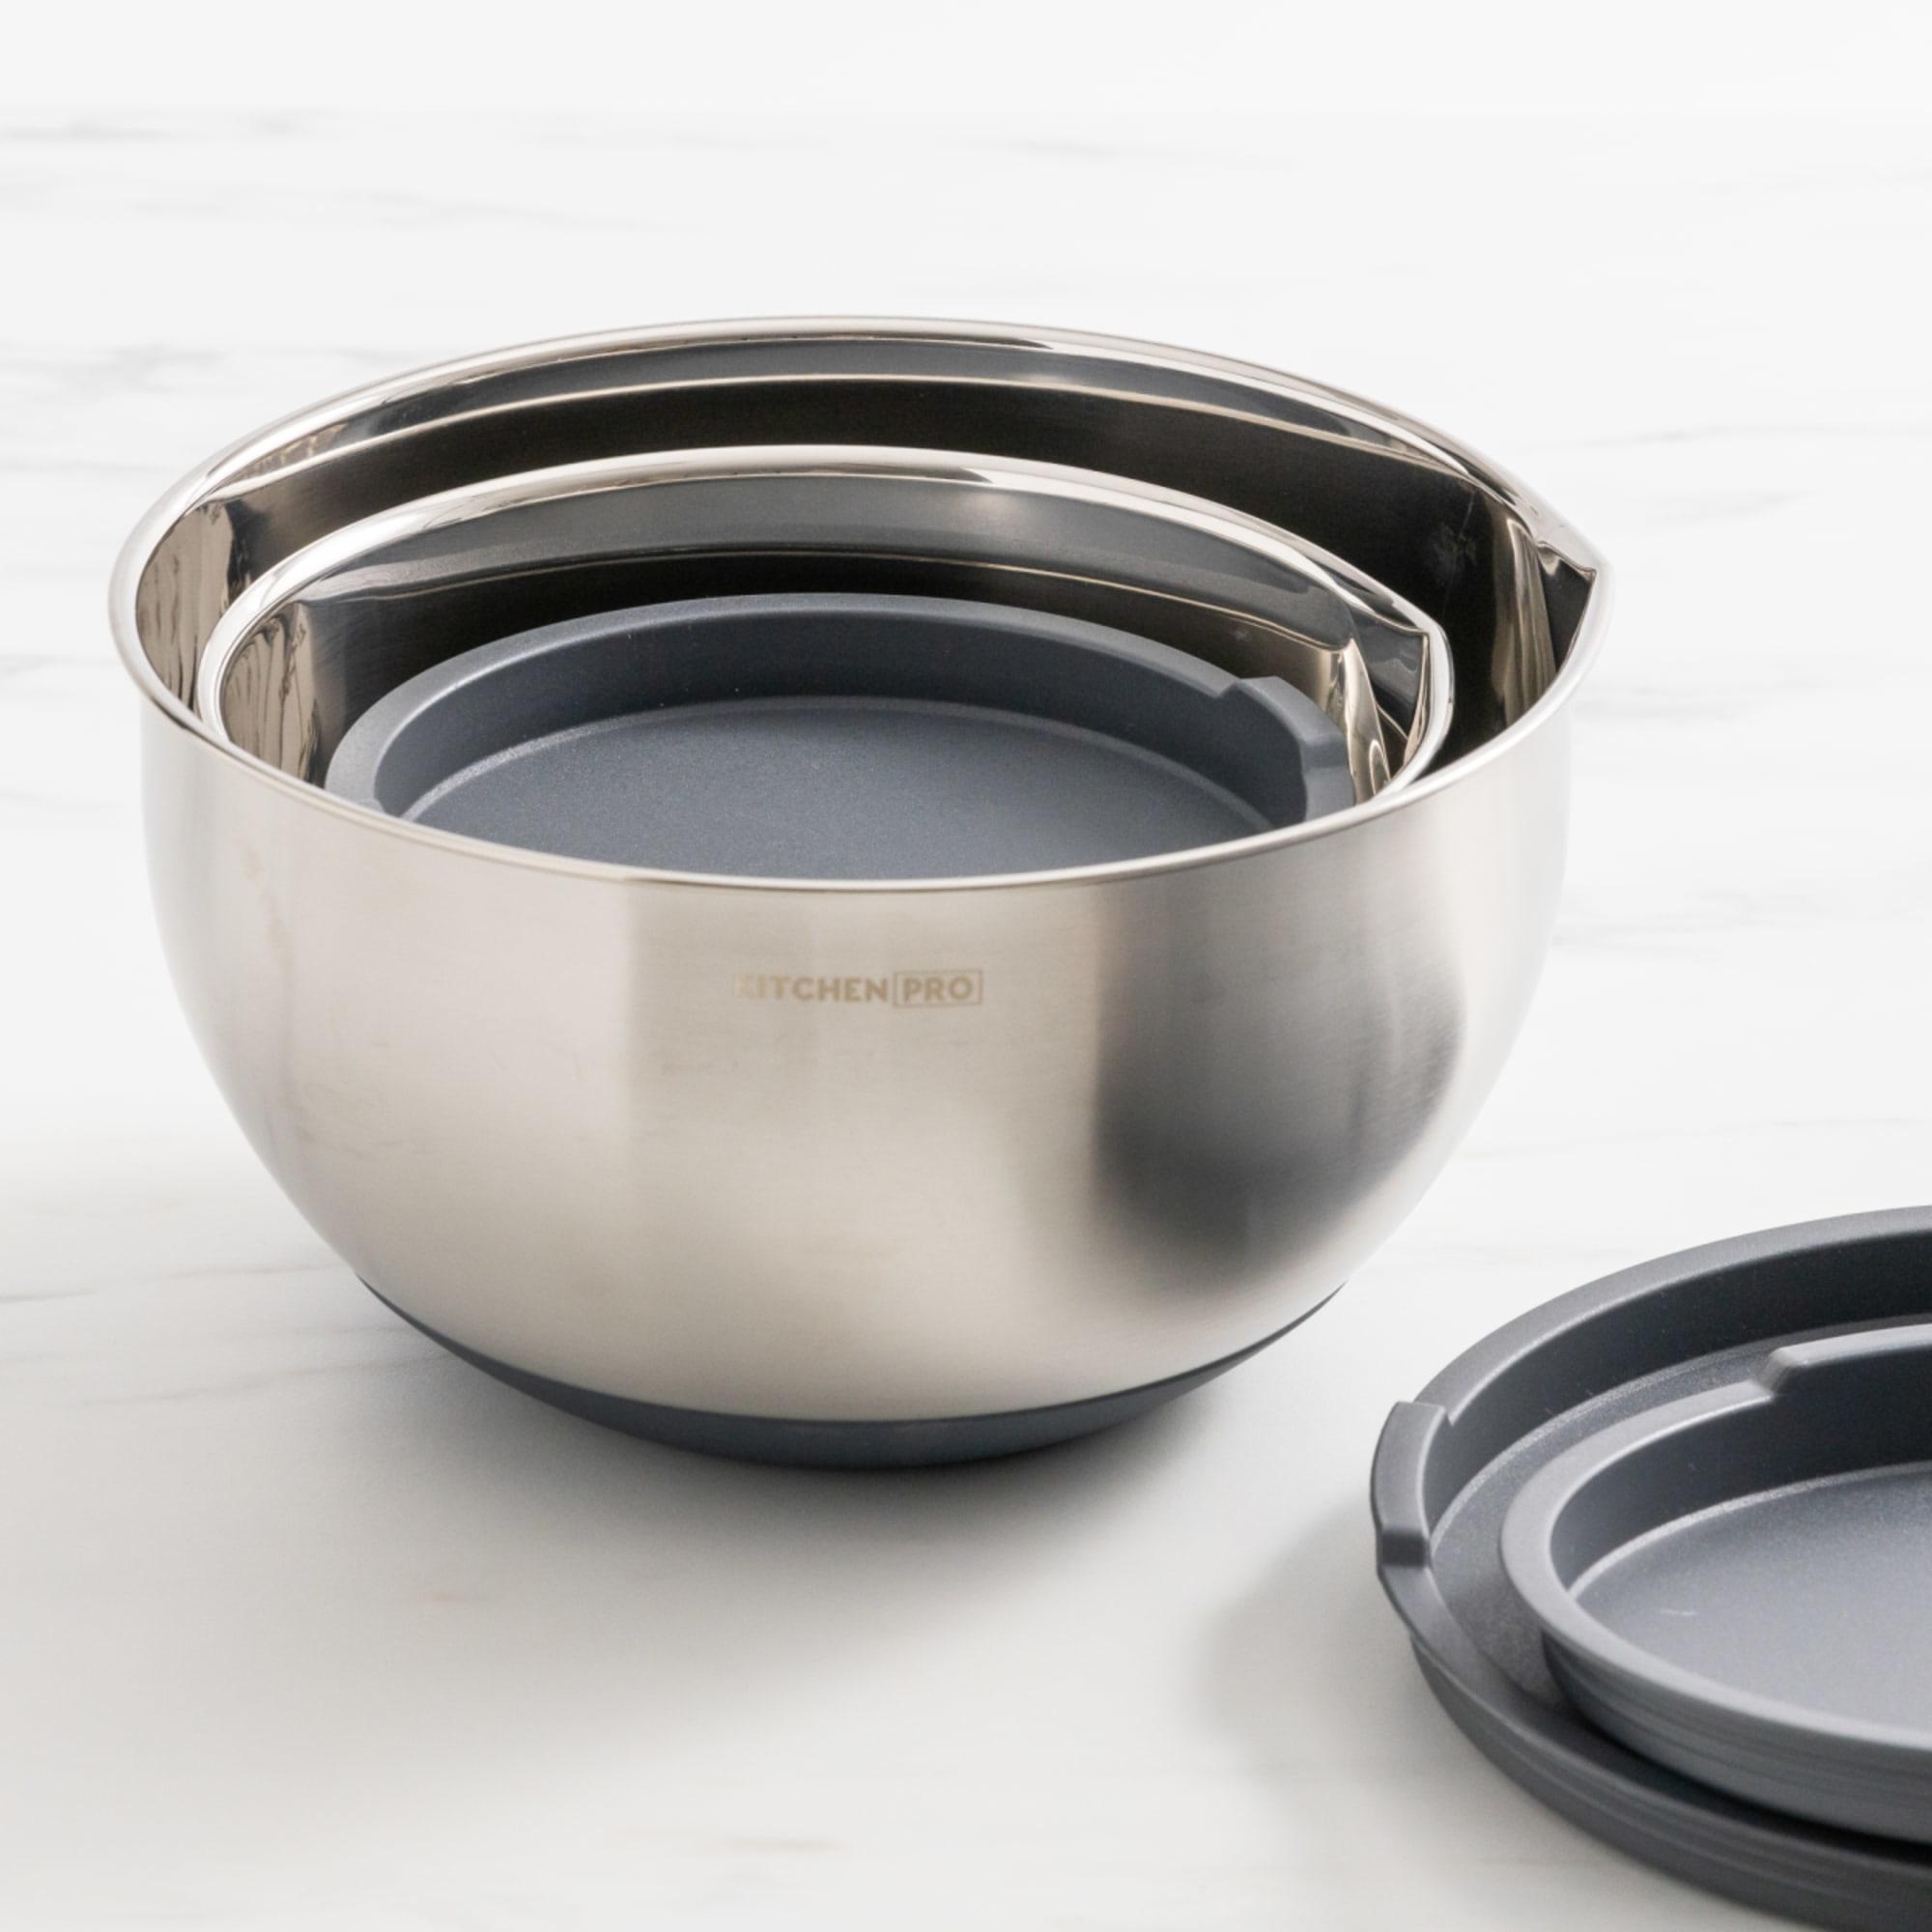 Kitchen Pro Mixwell Mixing Bowl with Lid Set 3pc Grey Image 3